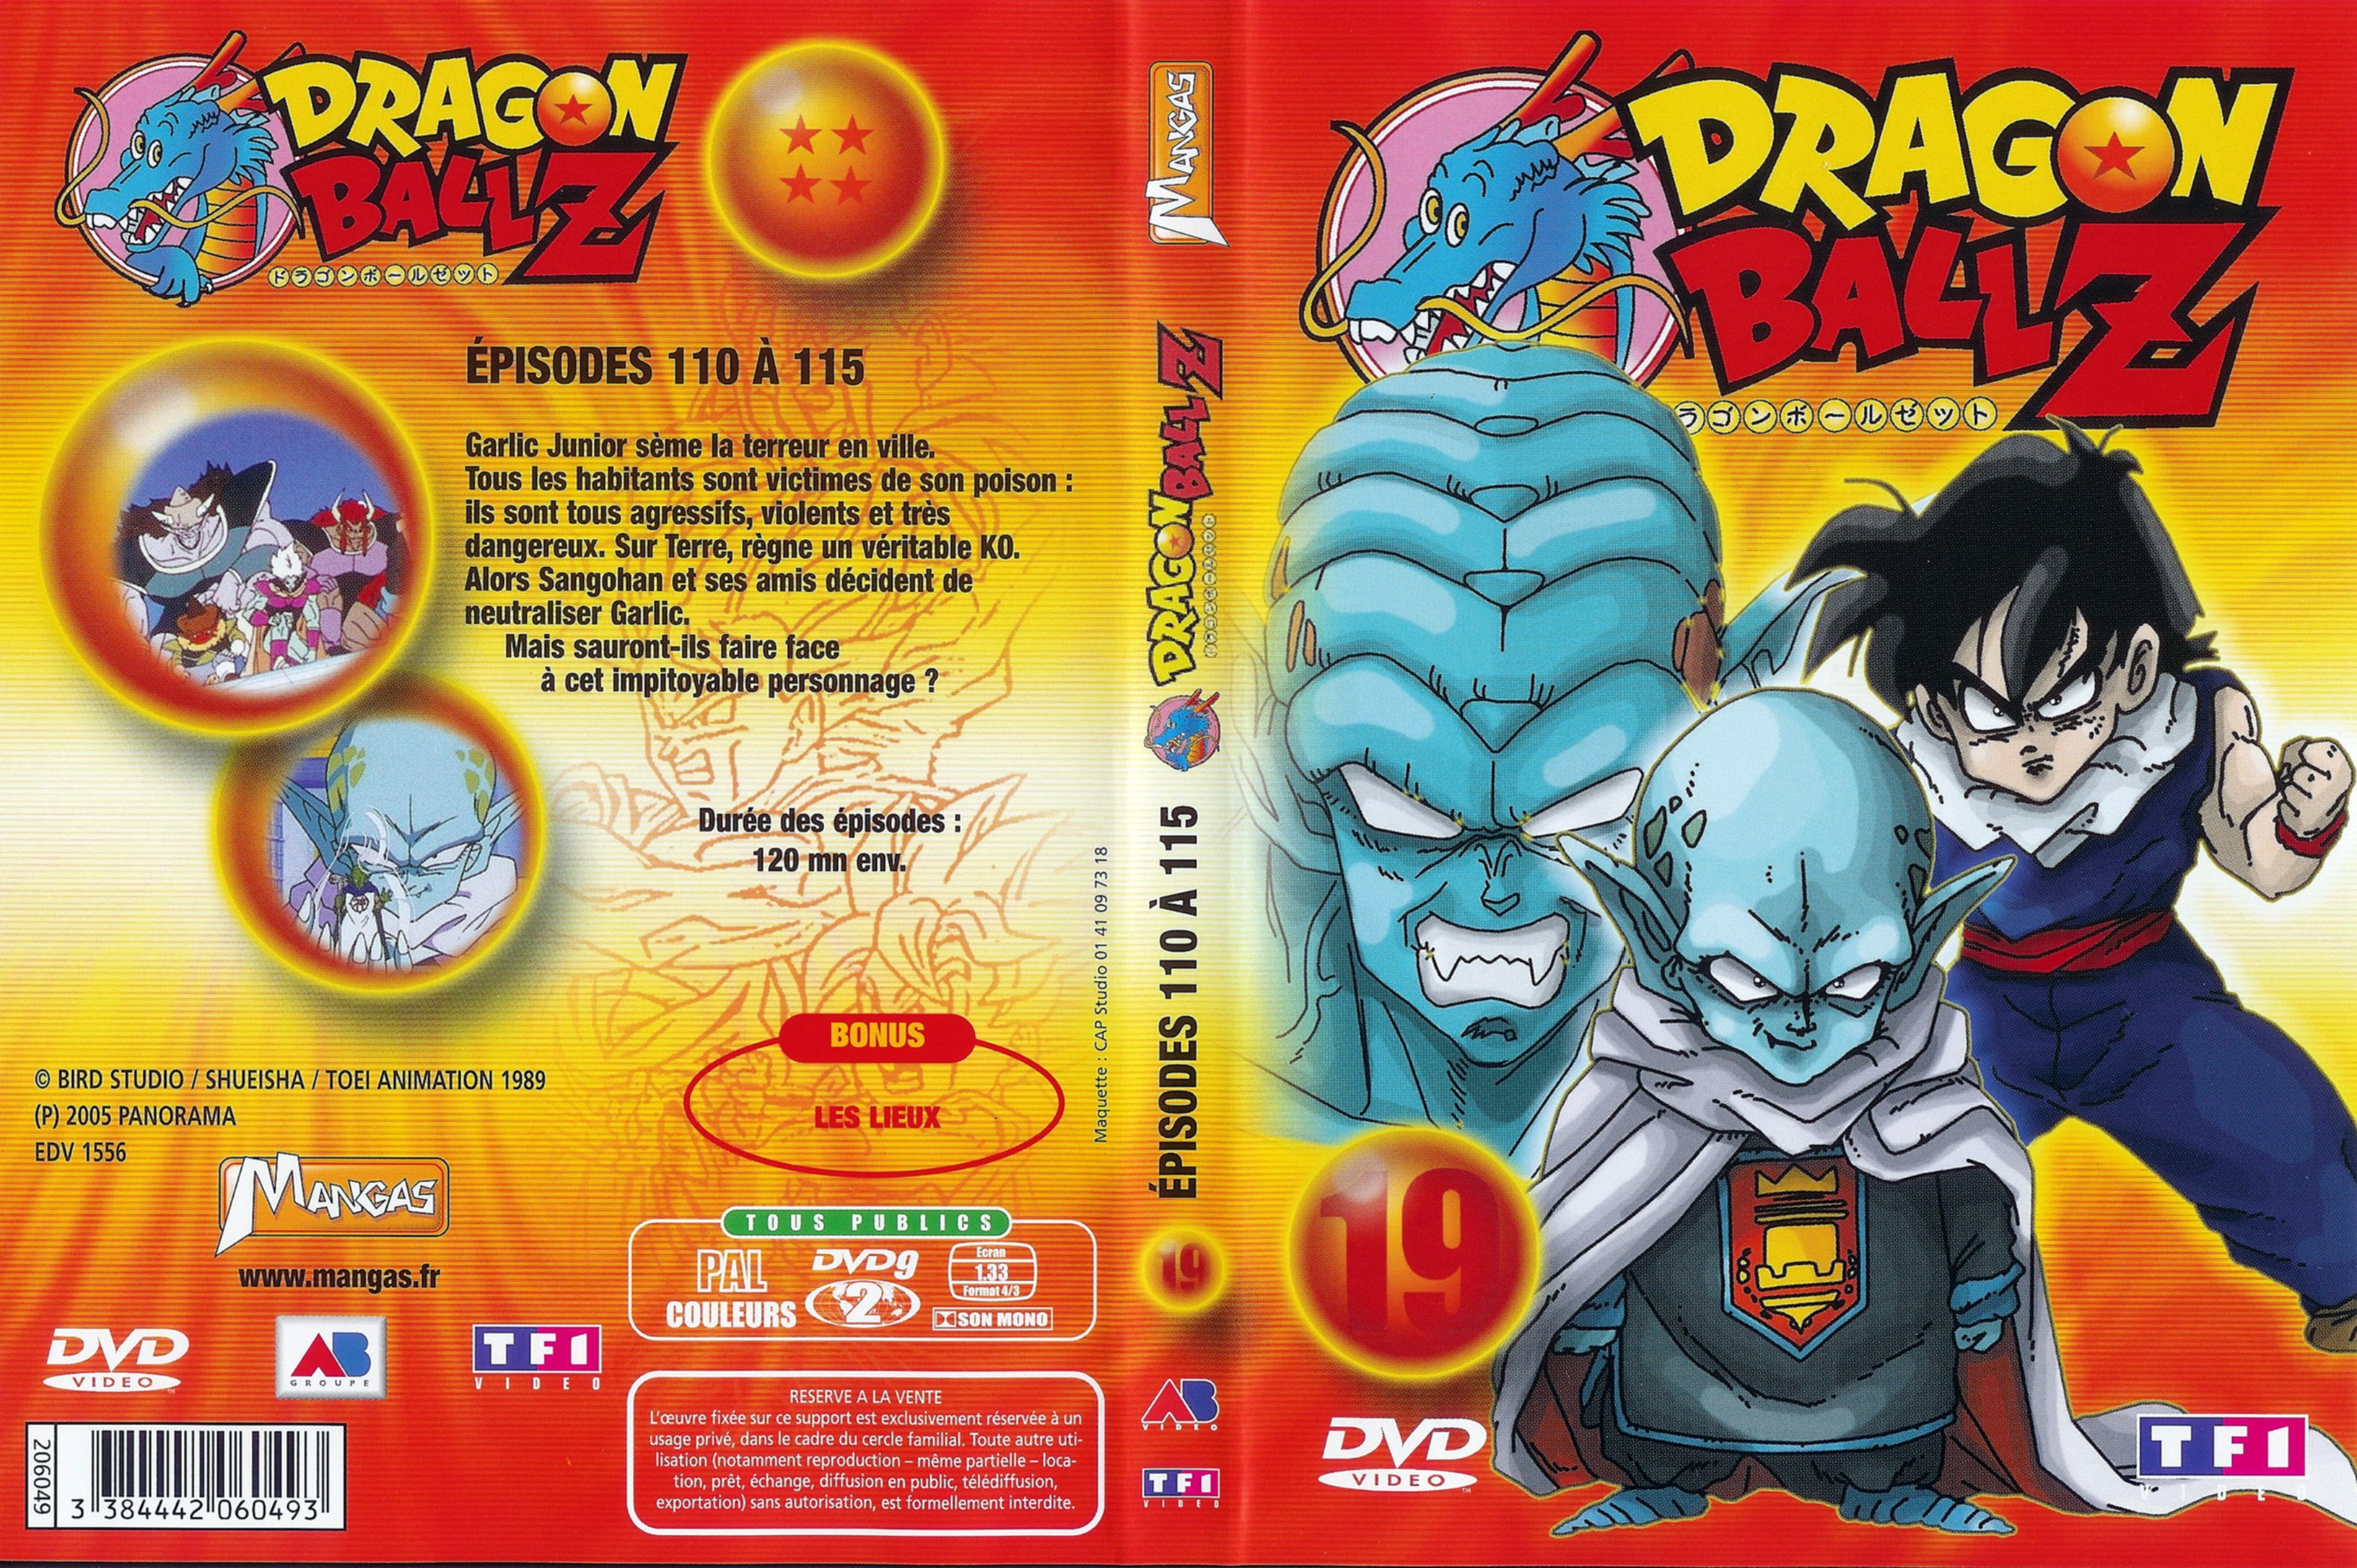 Jaquette DVD Dragon ball Z vol 19